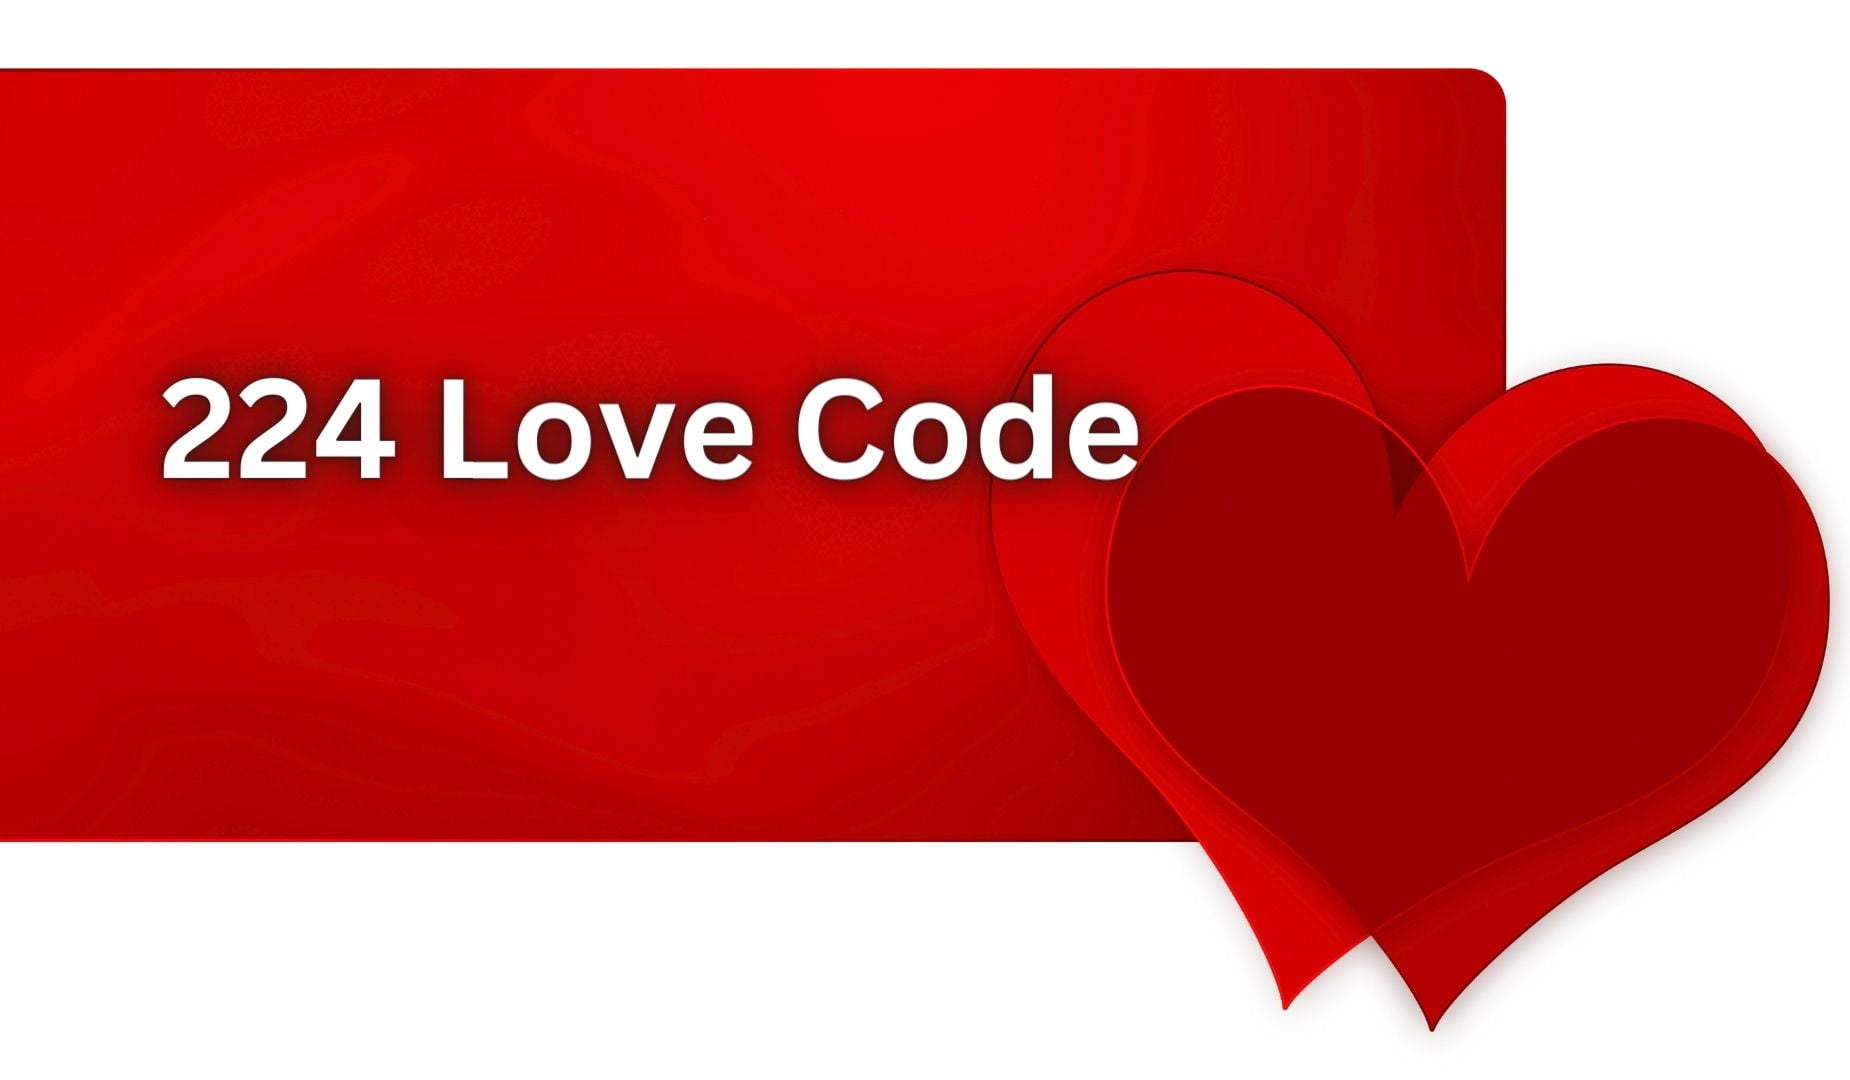 I love you цифрами. I Love code. Любовный код. Код i Love you в цифрах. I Love you to code.